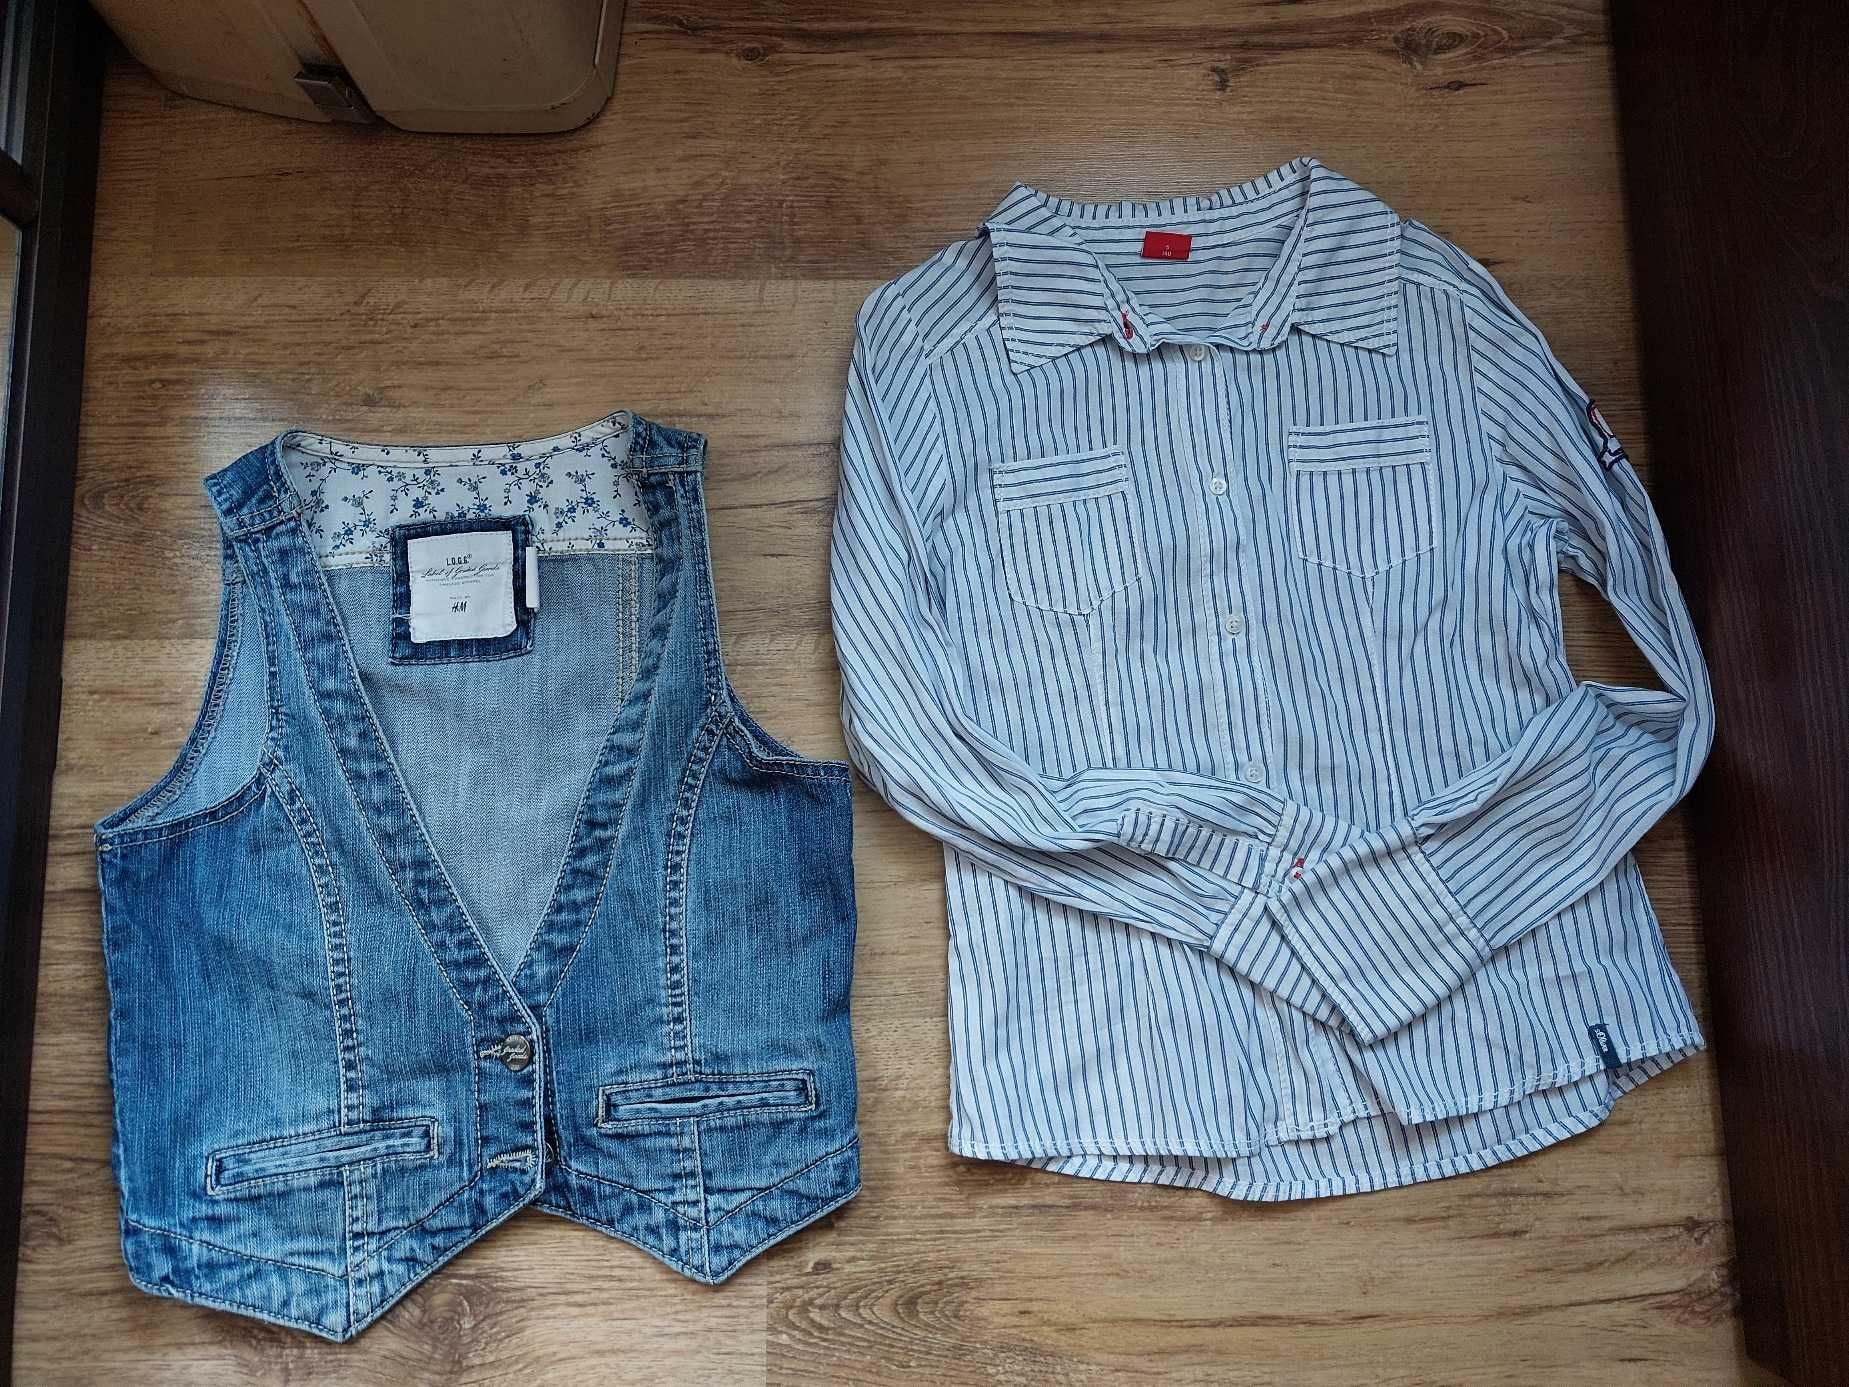 Oliver i H&M koszula i kamizelka jeansowa-140/146